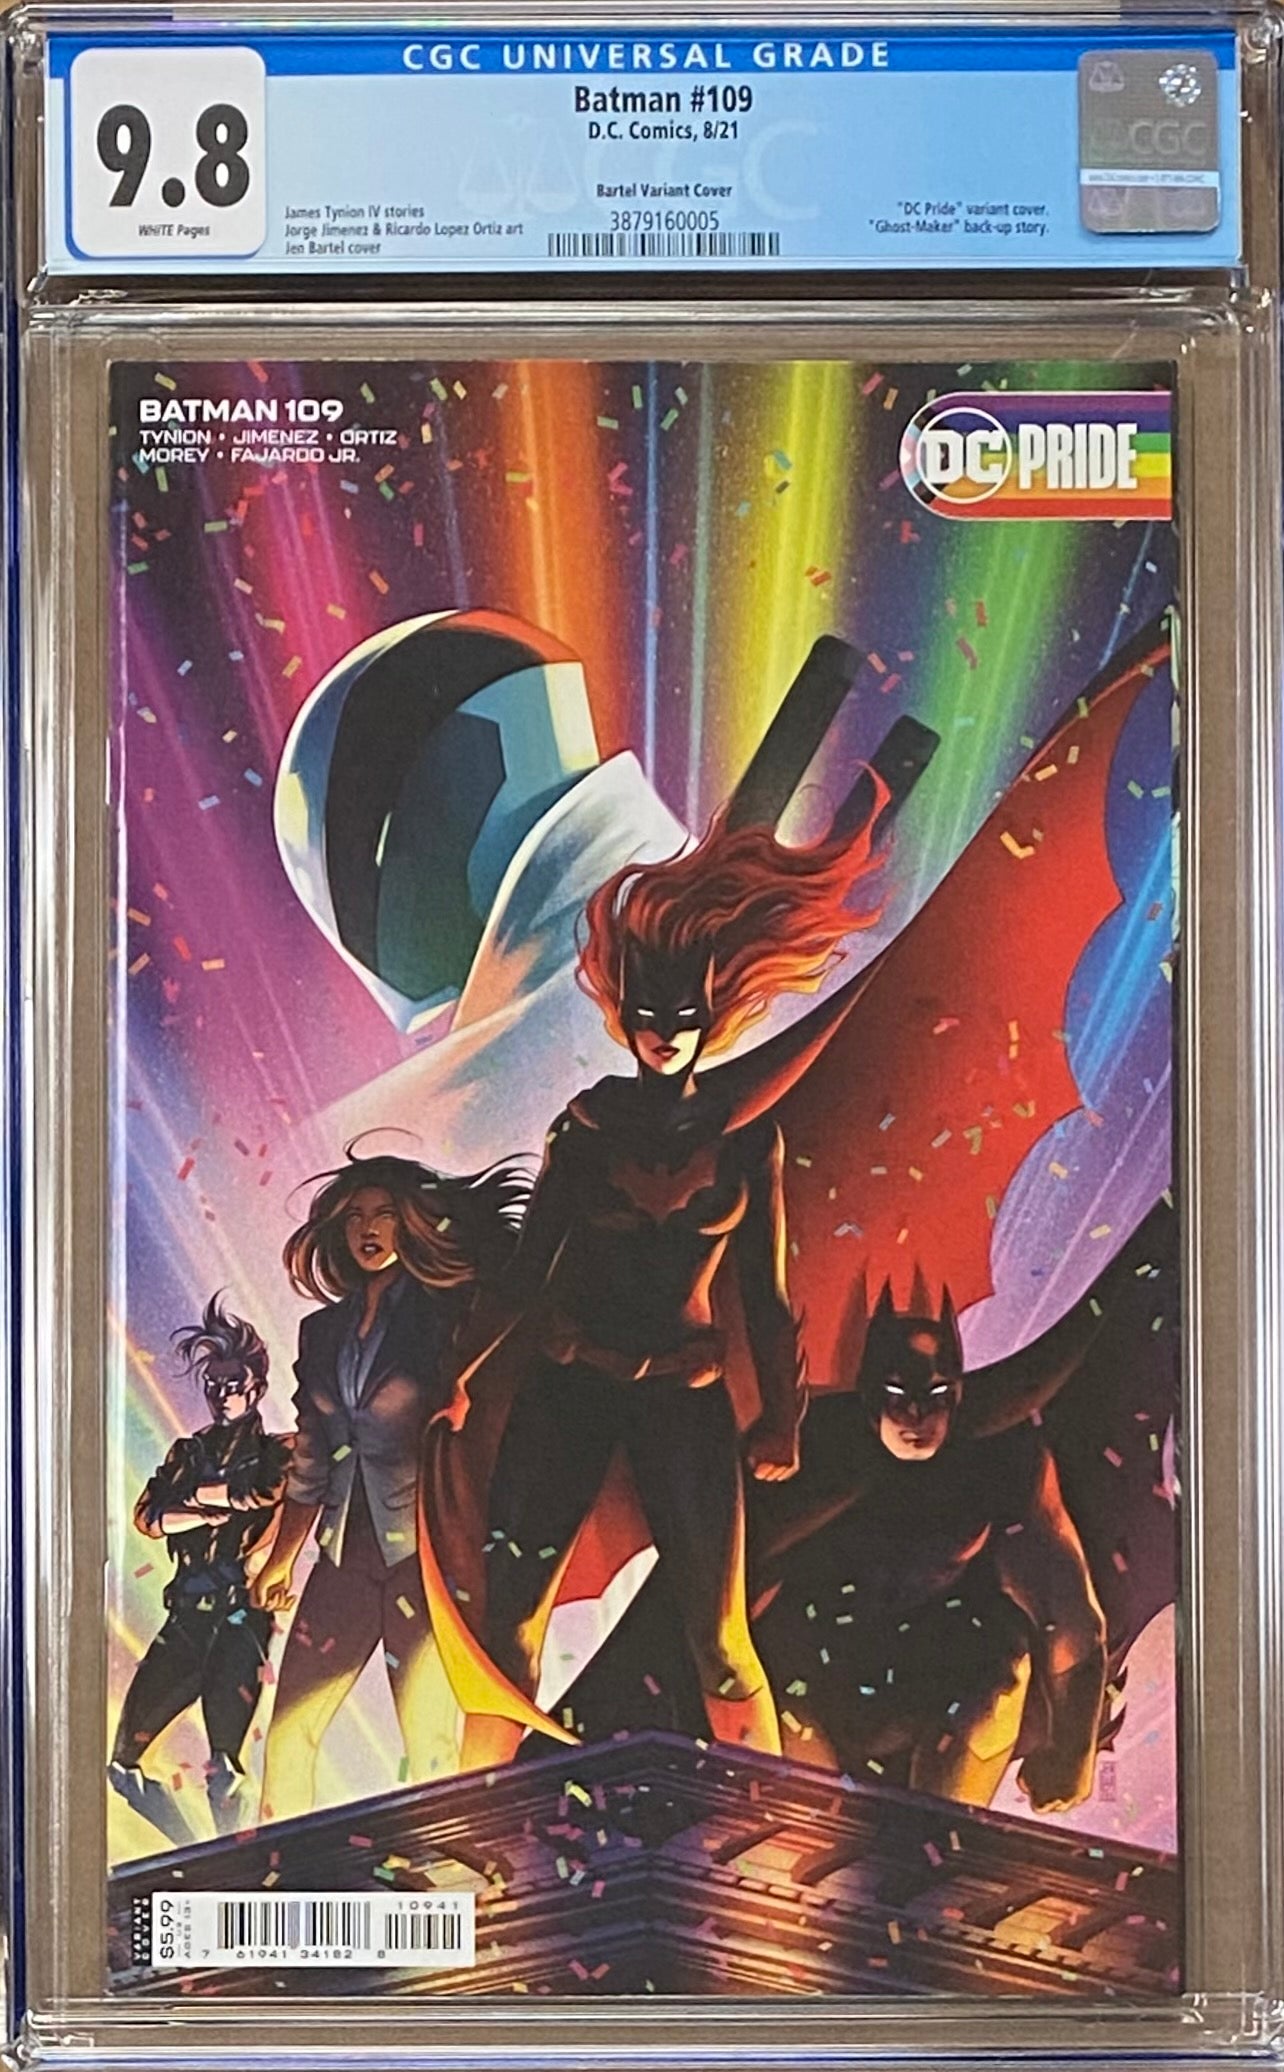 Batman #109 "Pride" Variant CGC 9.8